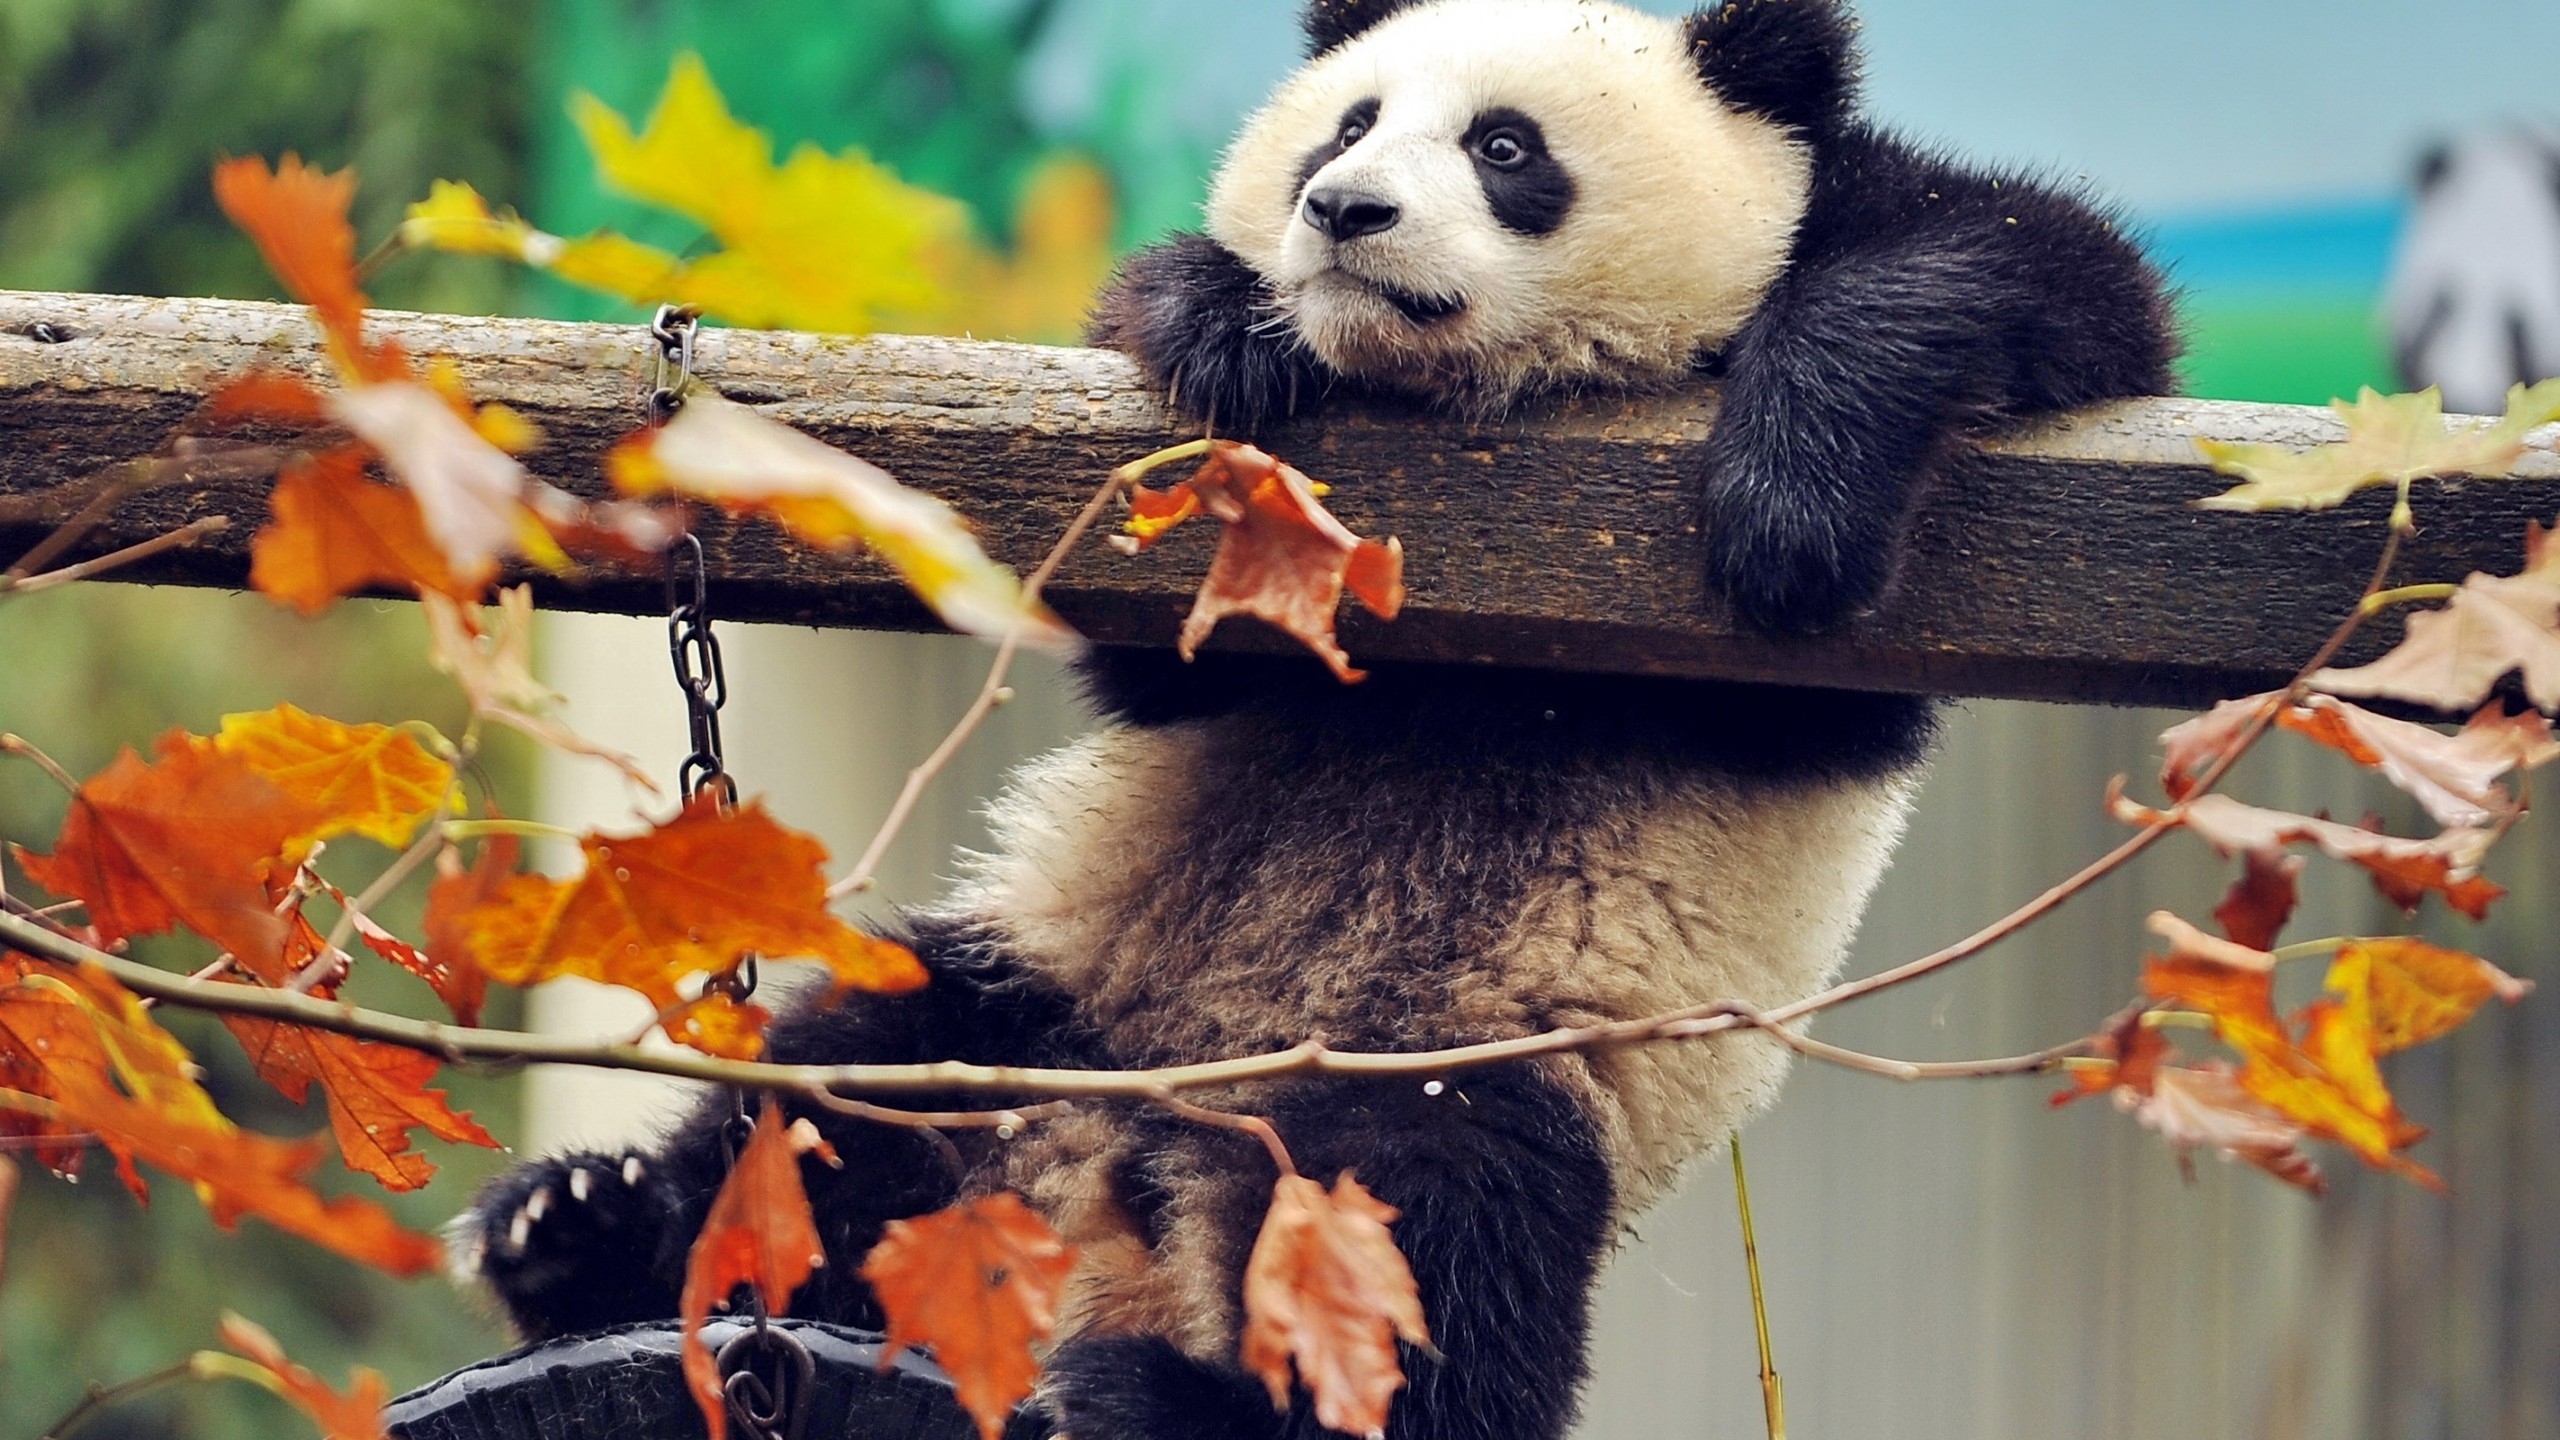 Cute Panda Climbing for 2560x1440 HDTV resolution